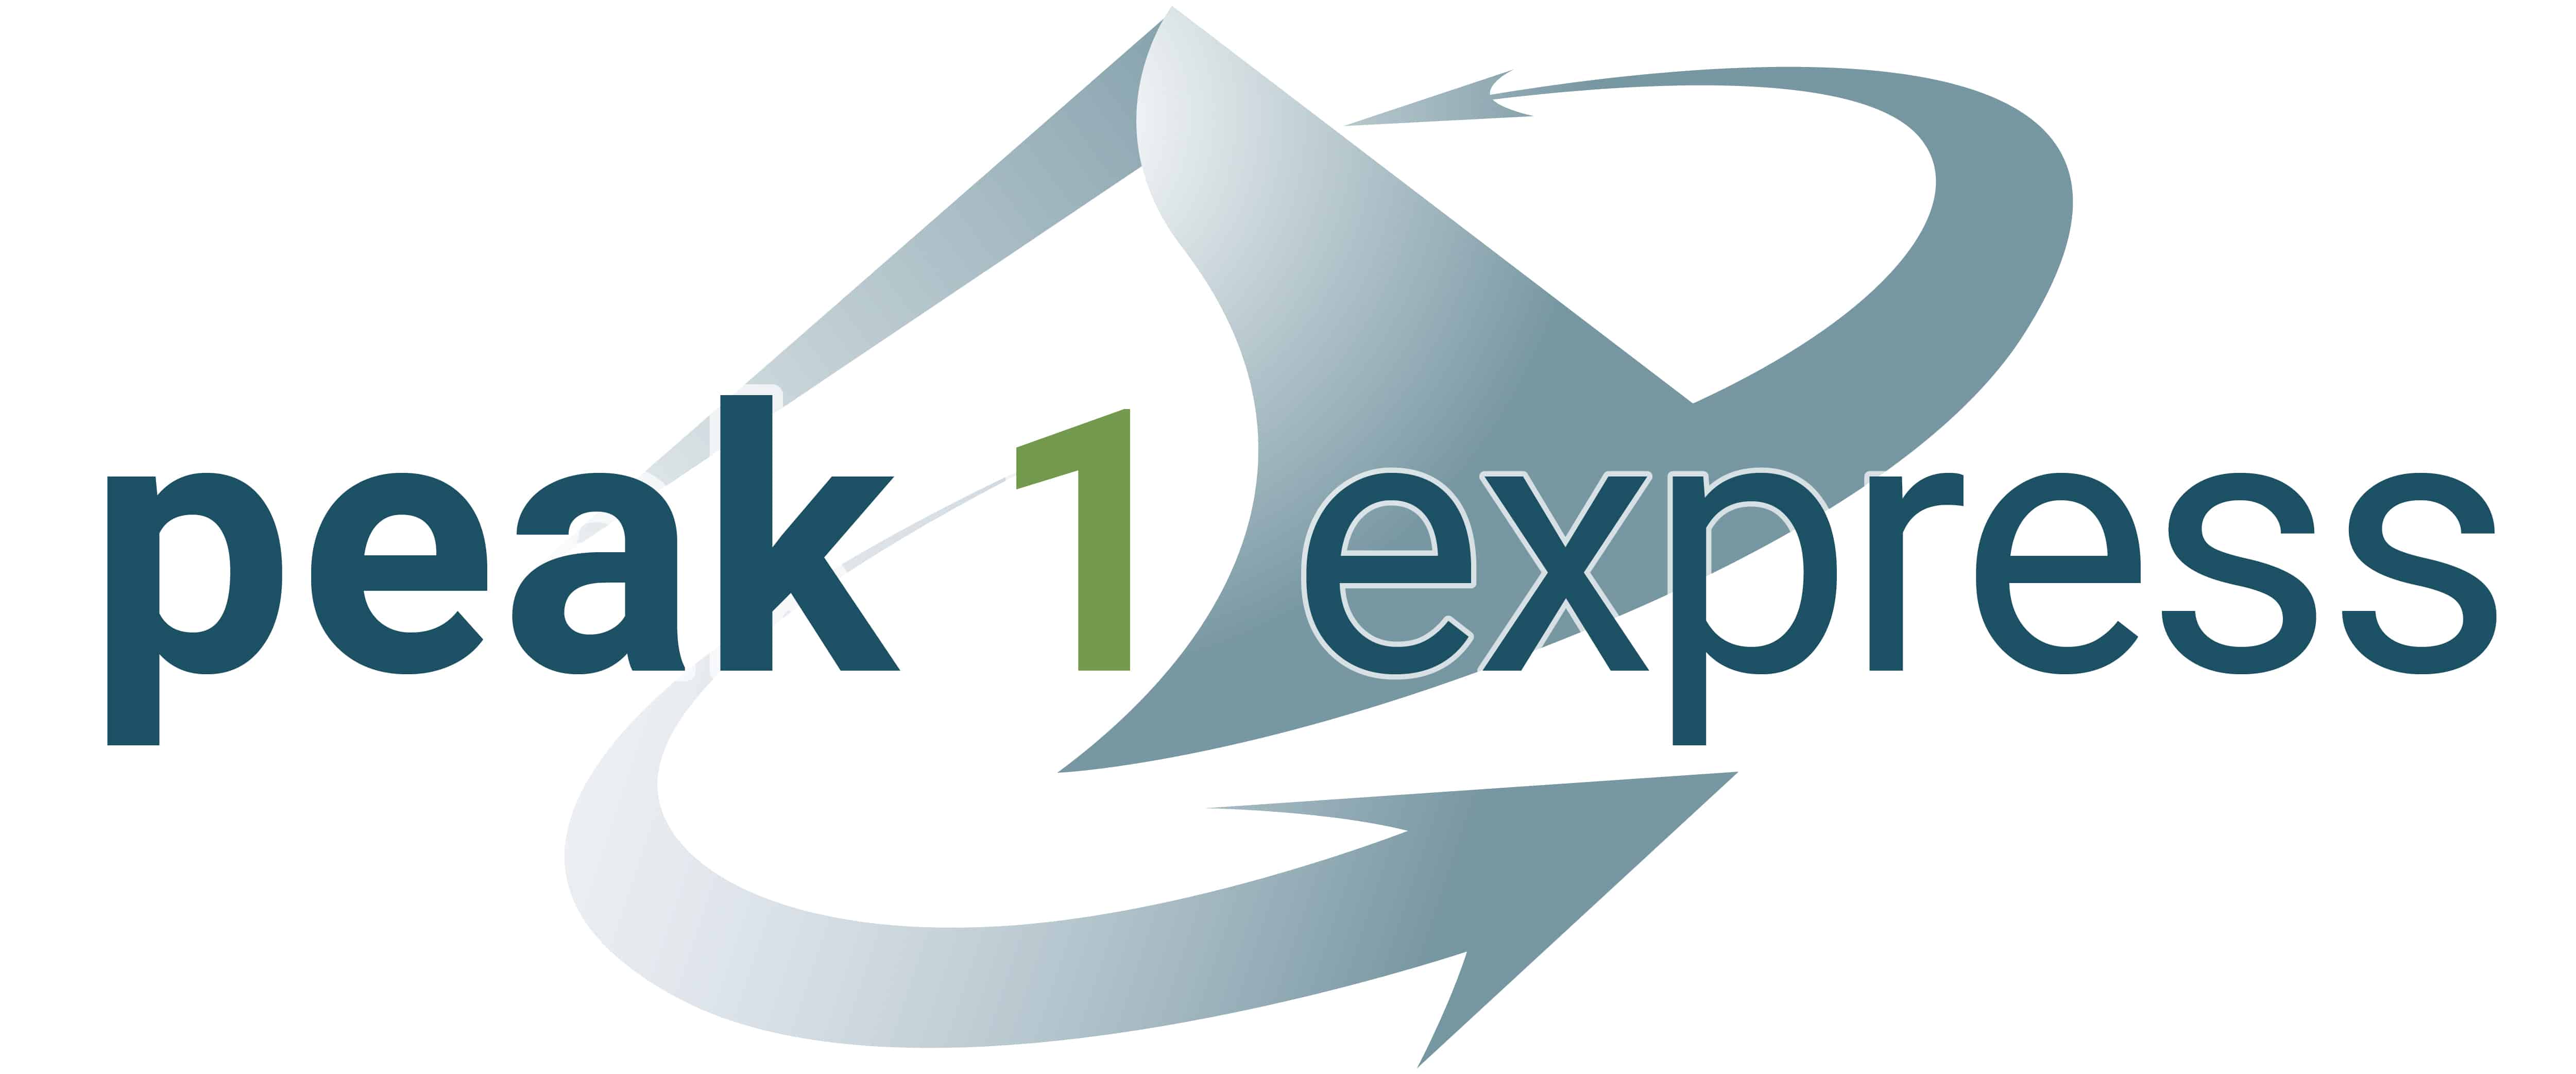 Peak 1 Express logo on white background